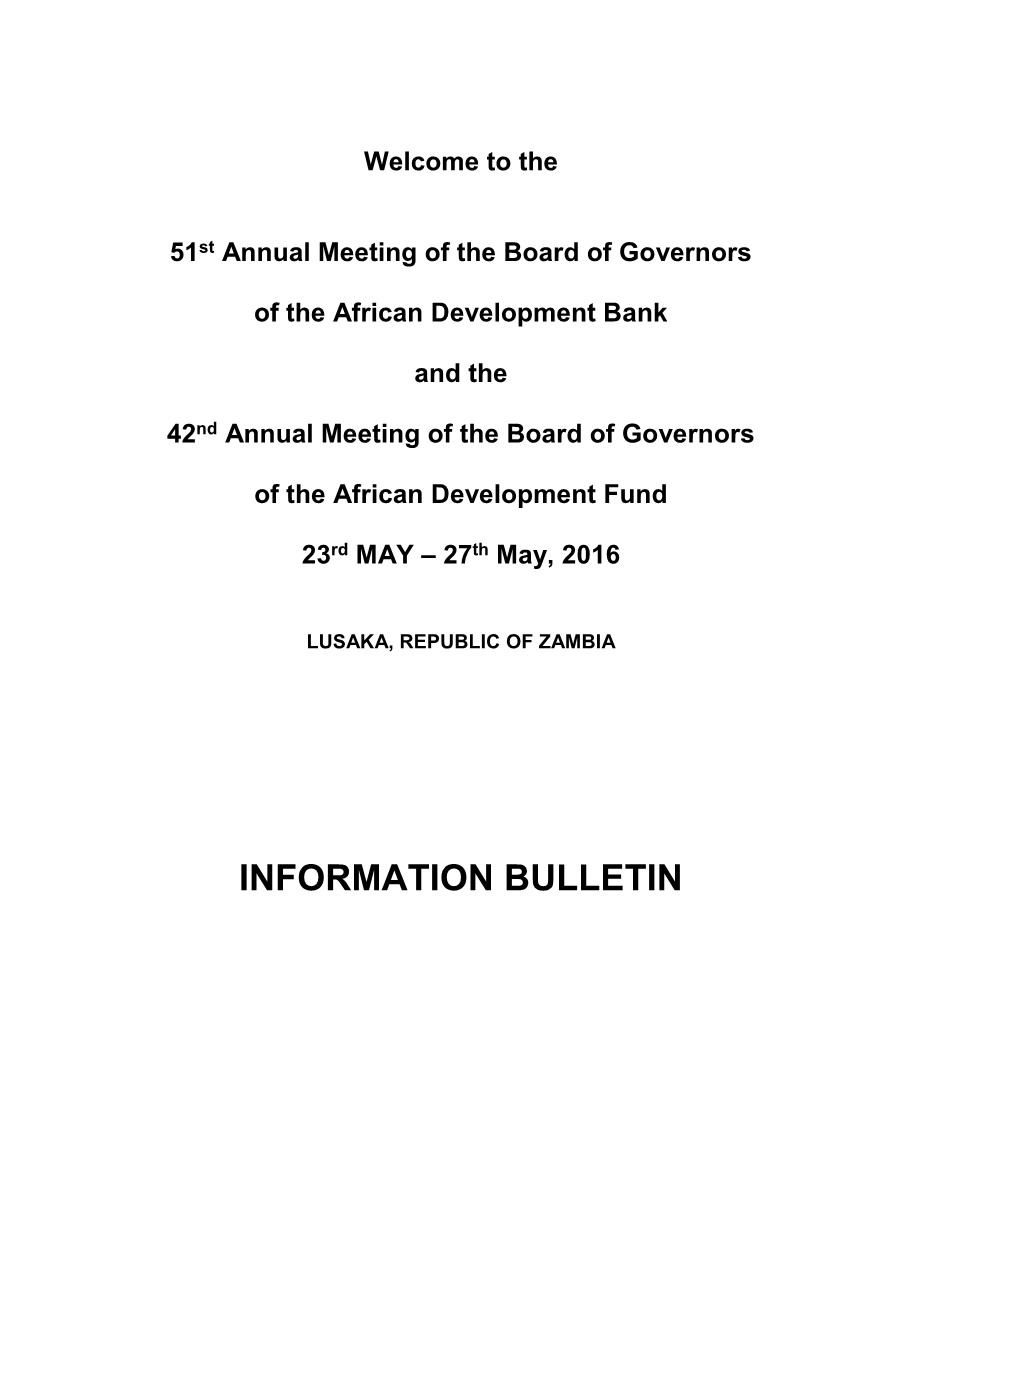 Information Bulletin – 2016 Annual Meetings